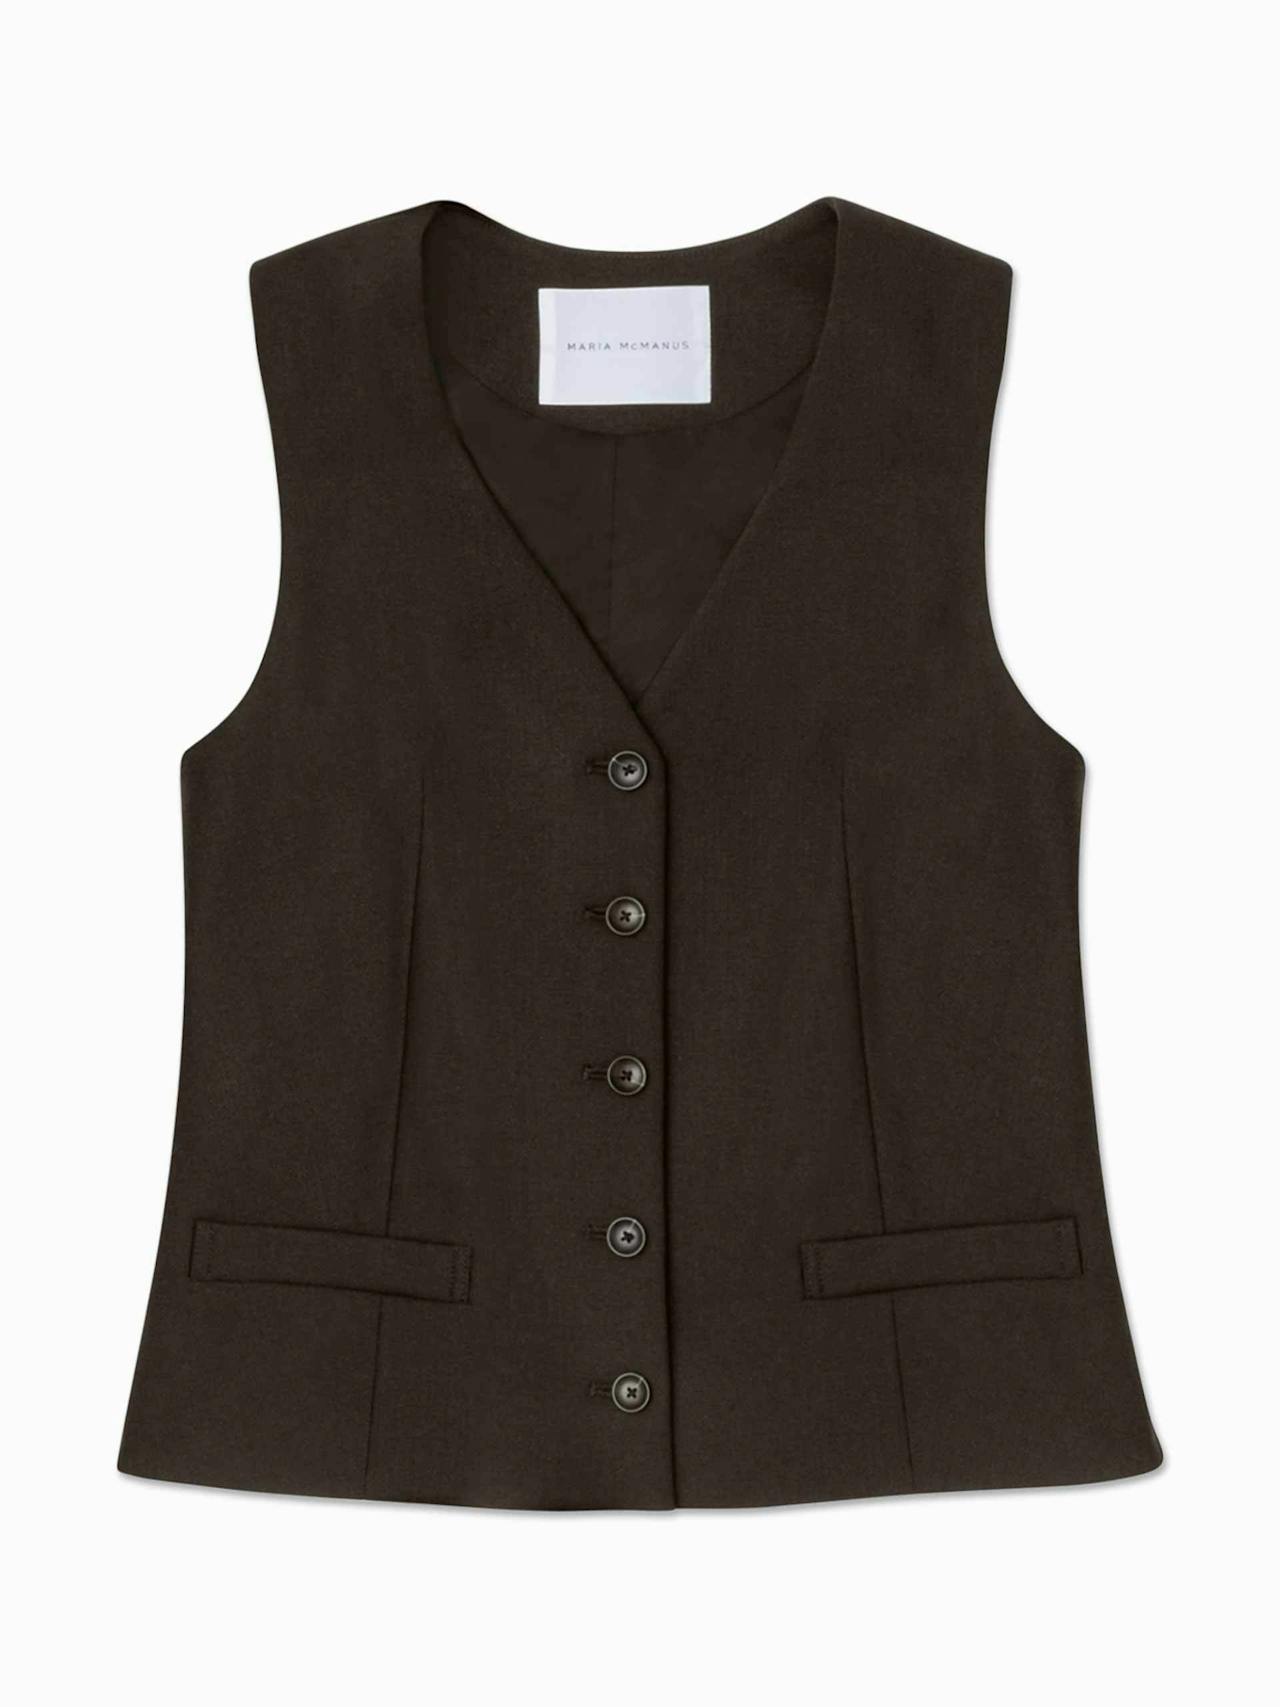 Chocolate tailored vest